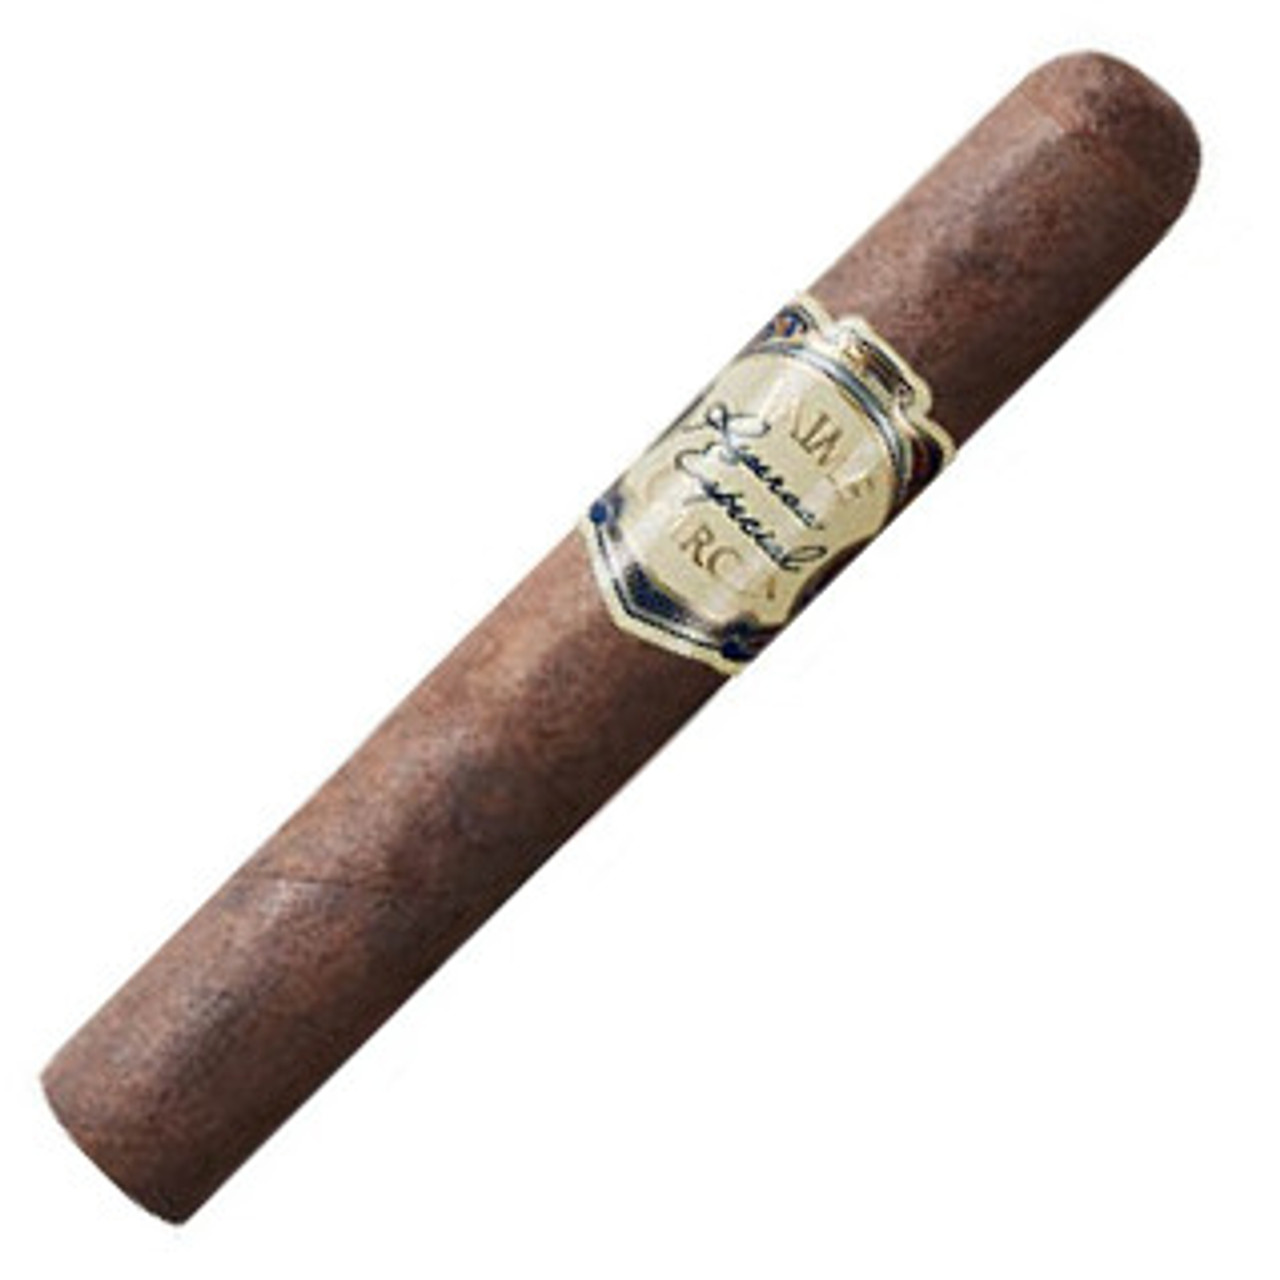 Jaime Garcia Reserva Especial Robusto Cigars - 5.25 x 52 Single